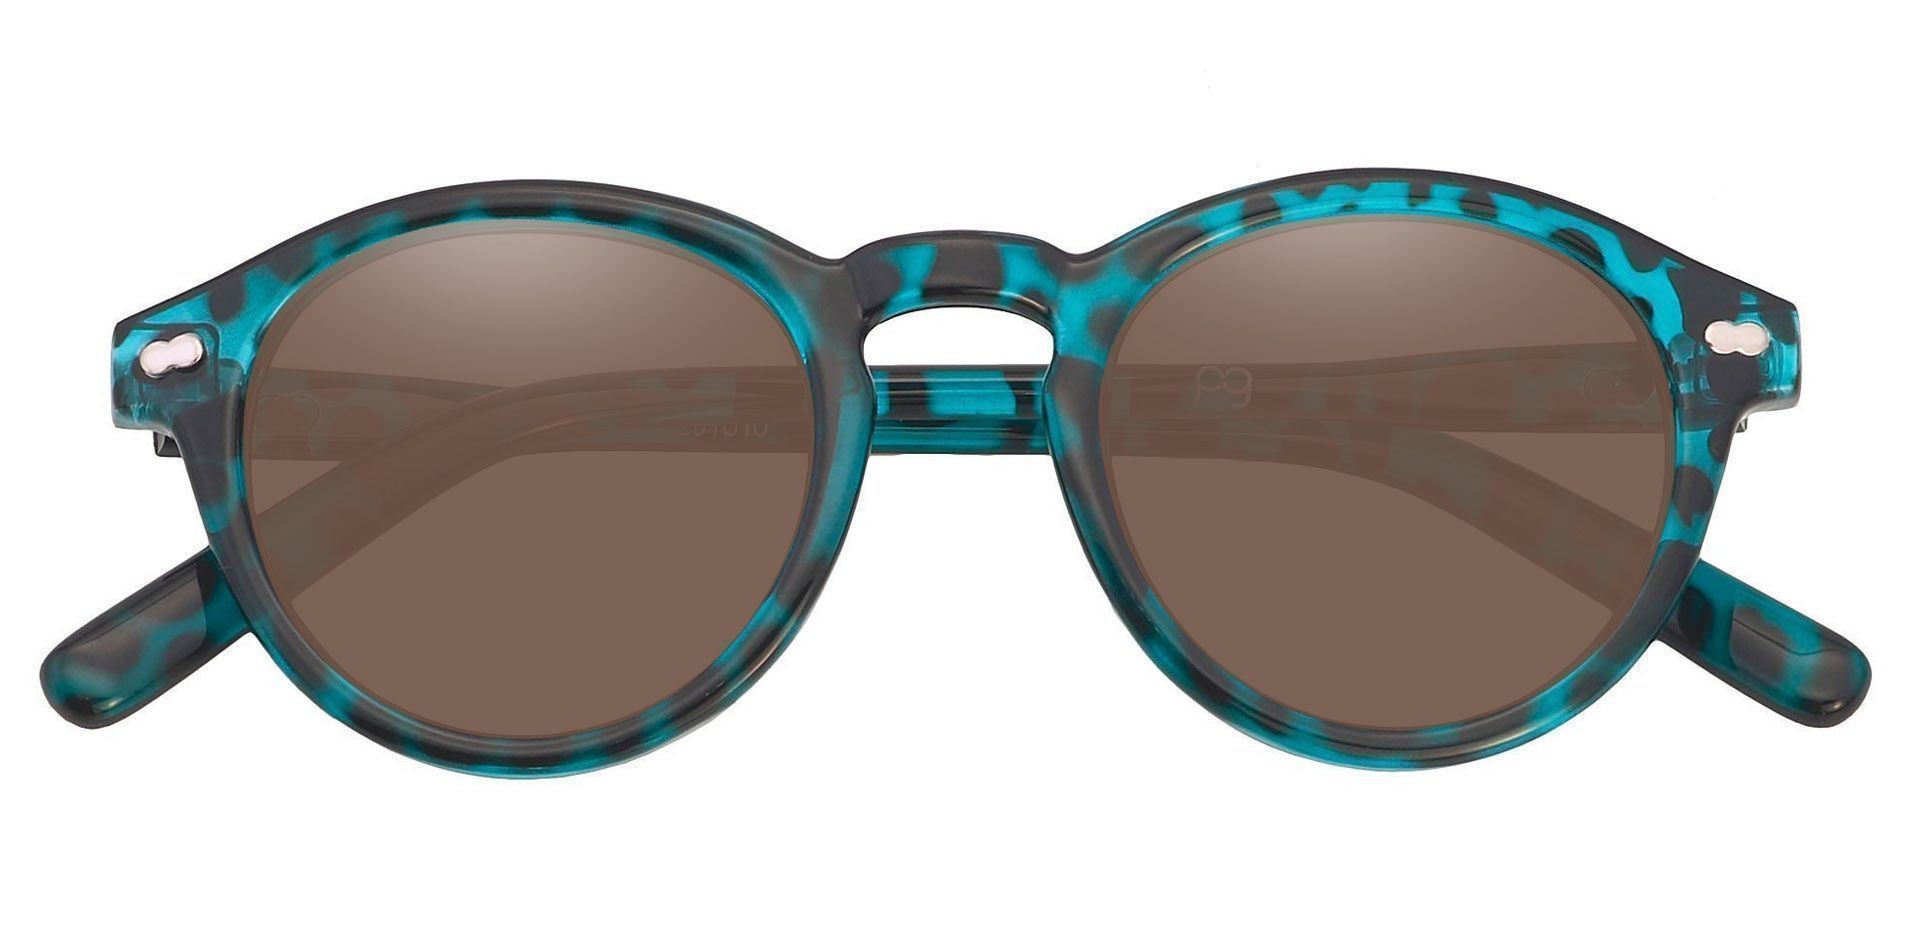 Vee Round Prescription Sunglasses - Blue Frame With Brown Lenses